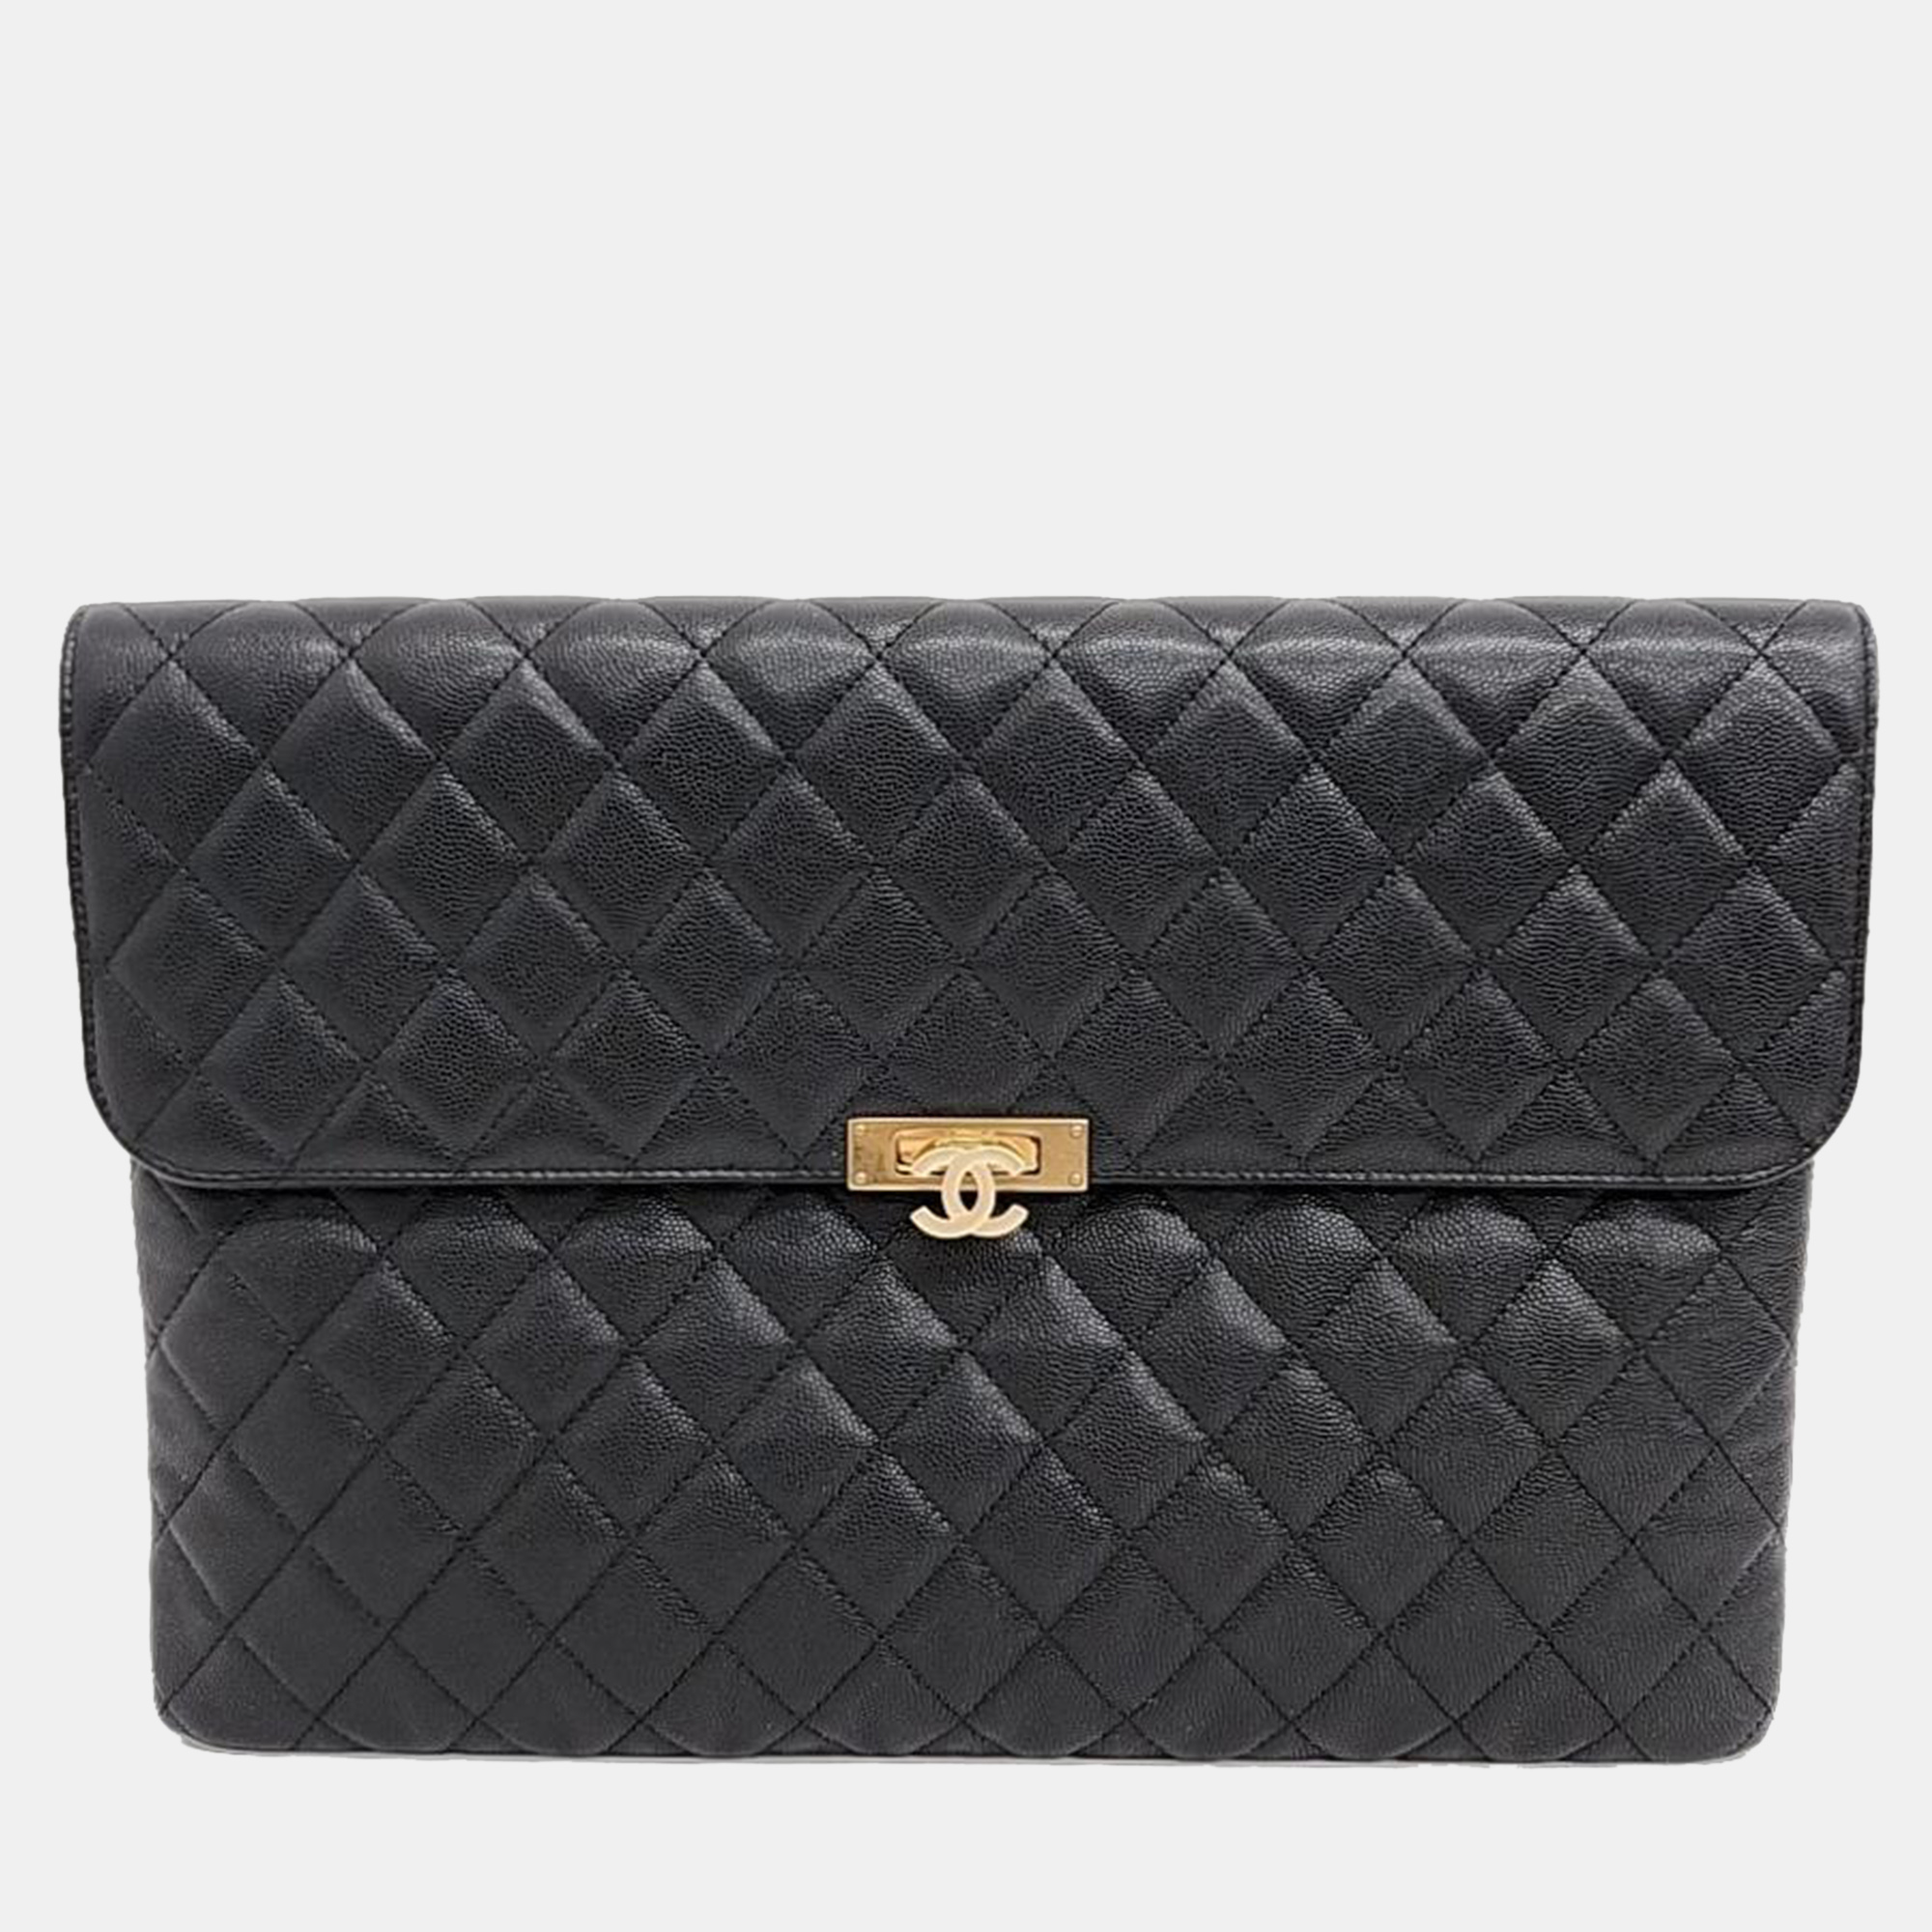 

Chanel Black Leather Large Flap Clutch Bag